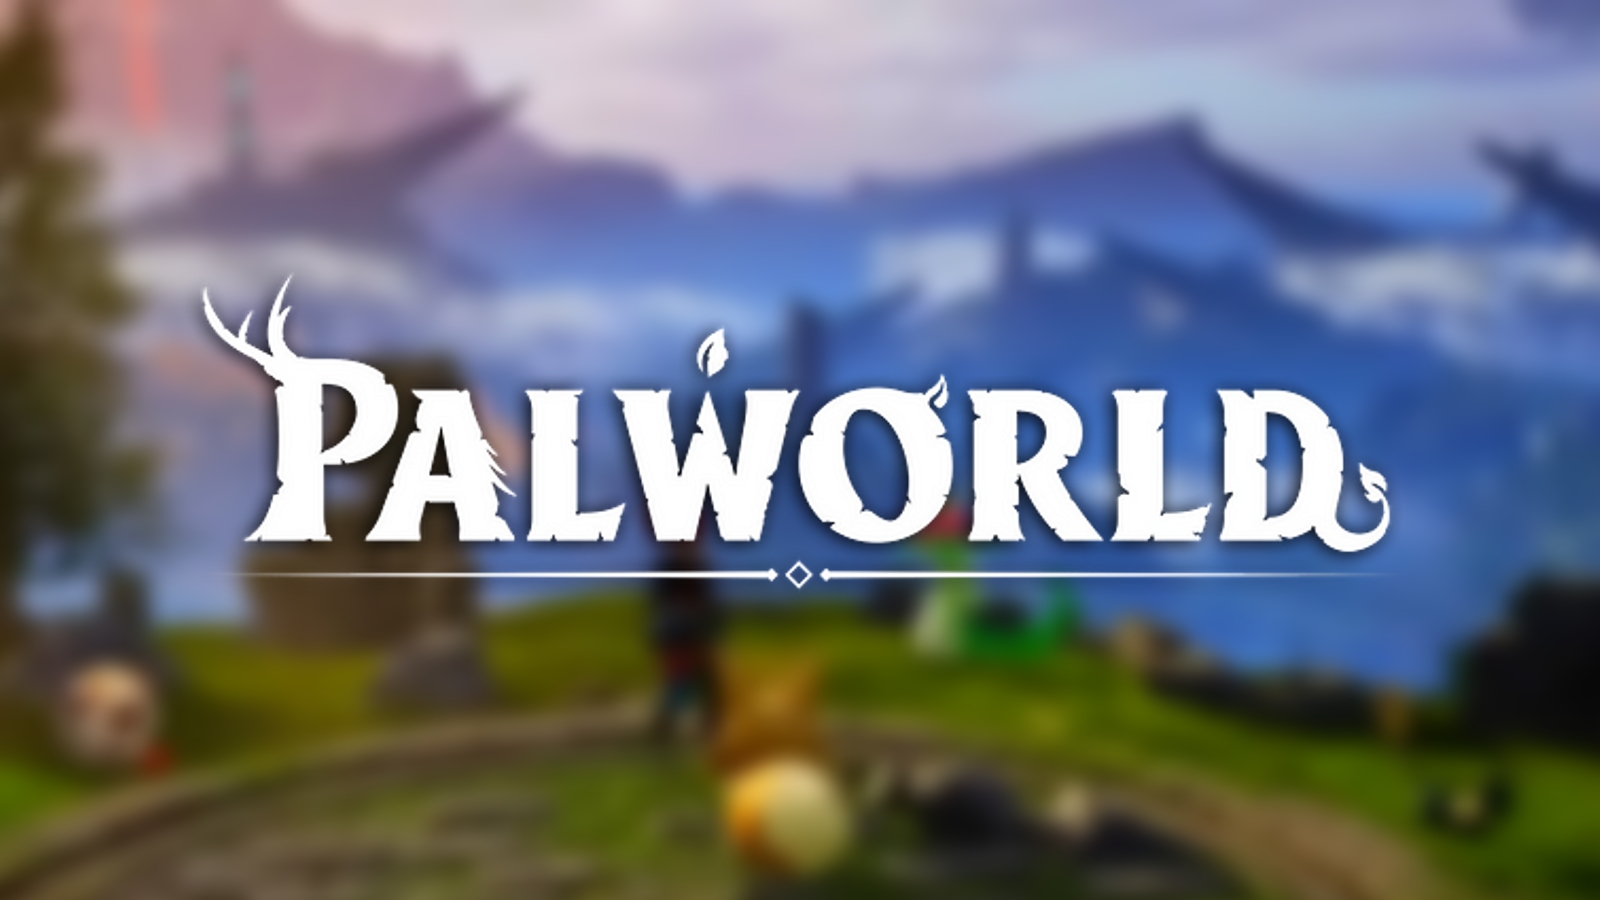 Palworld 플레이어는 삶의 질에 있어 “중요한” 변화를 요구합니다.